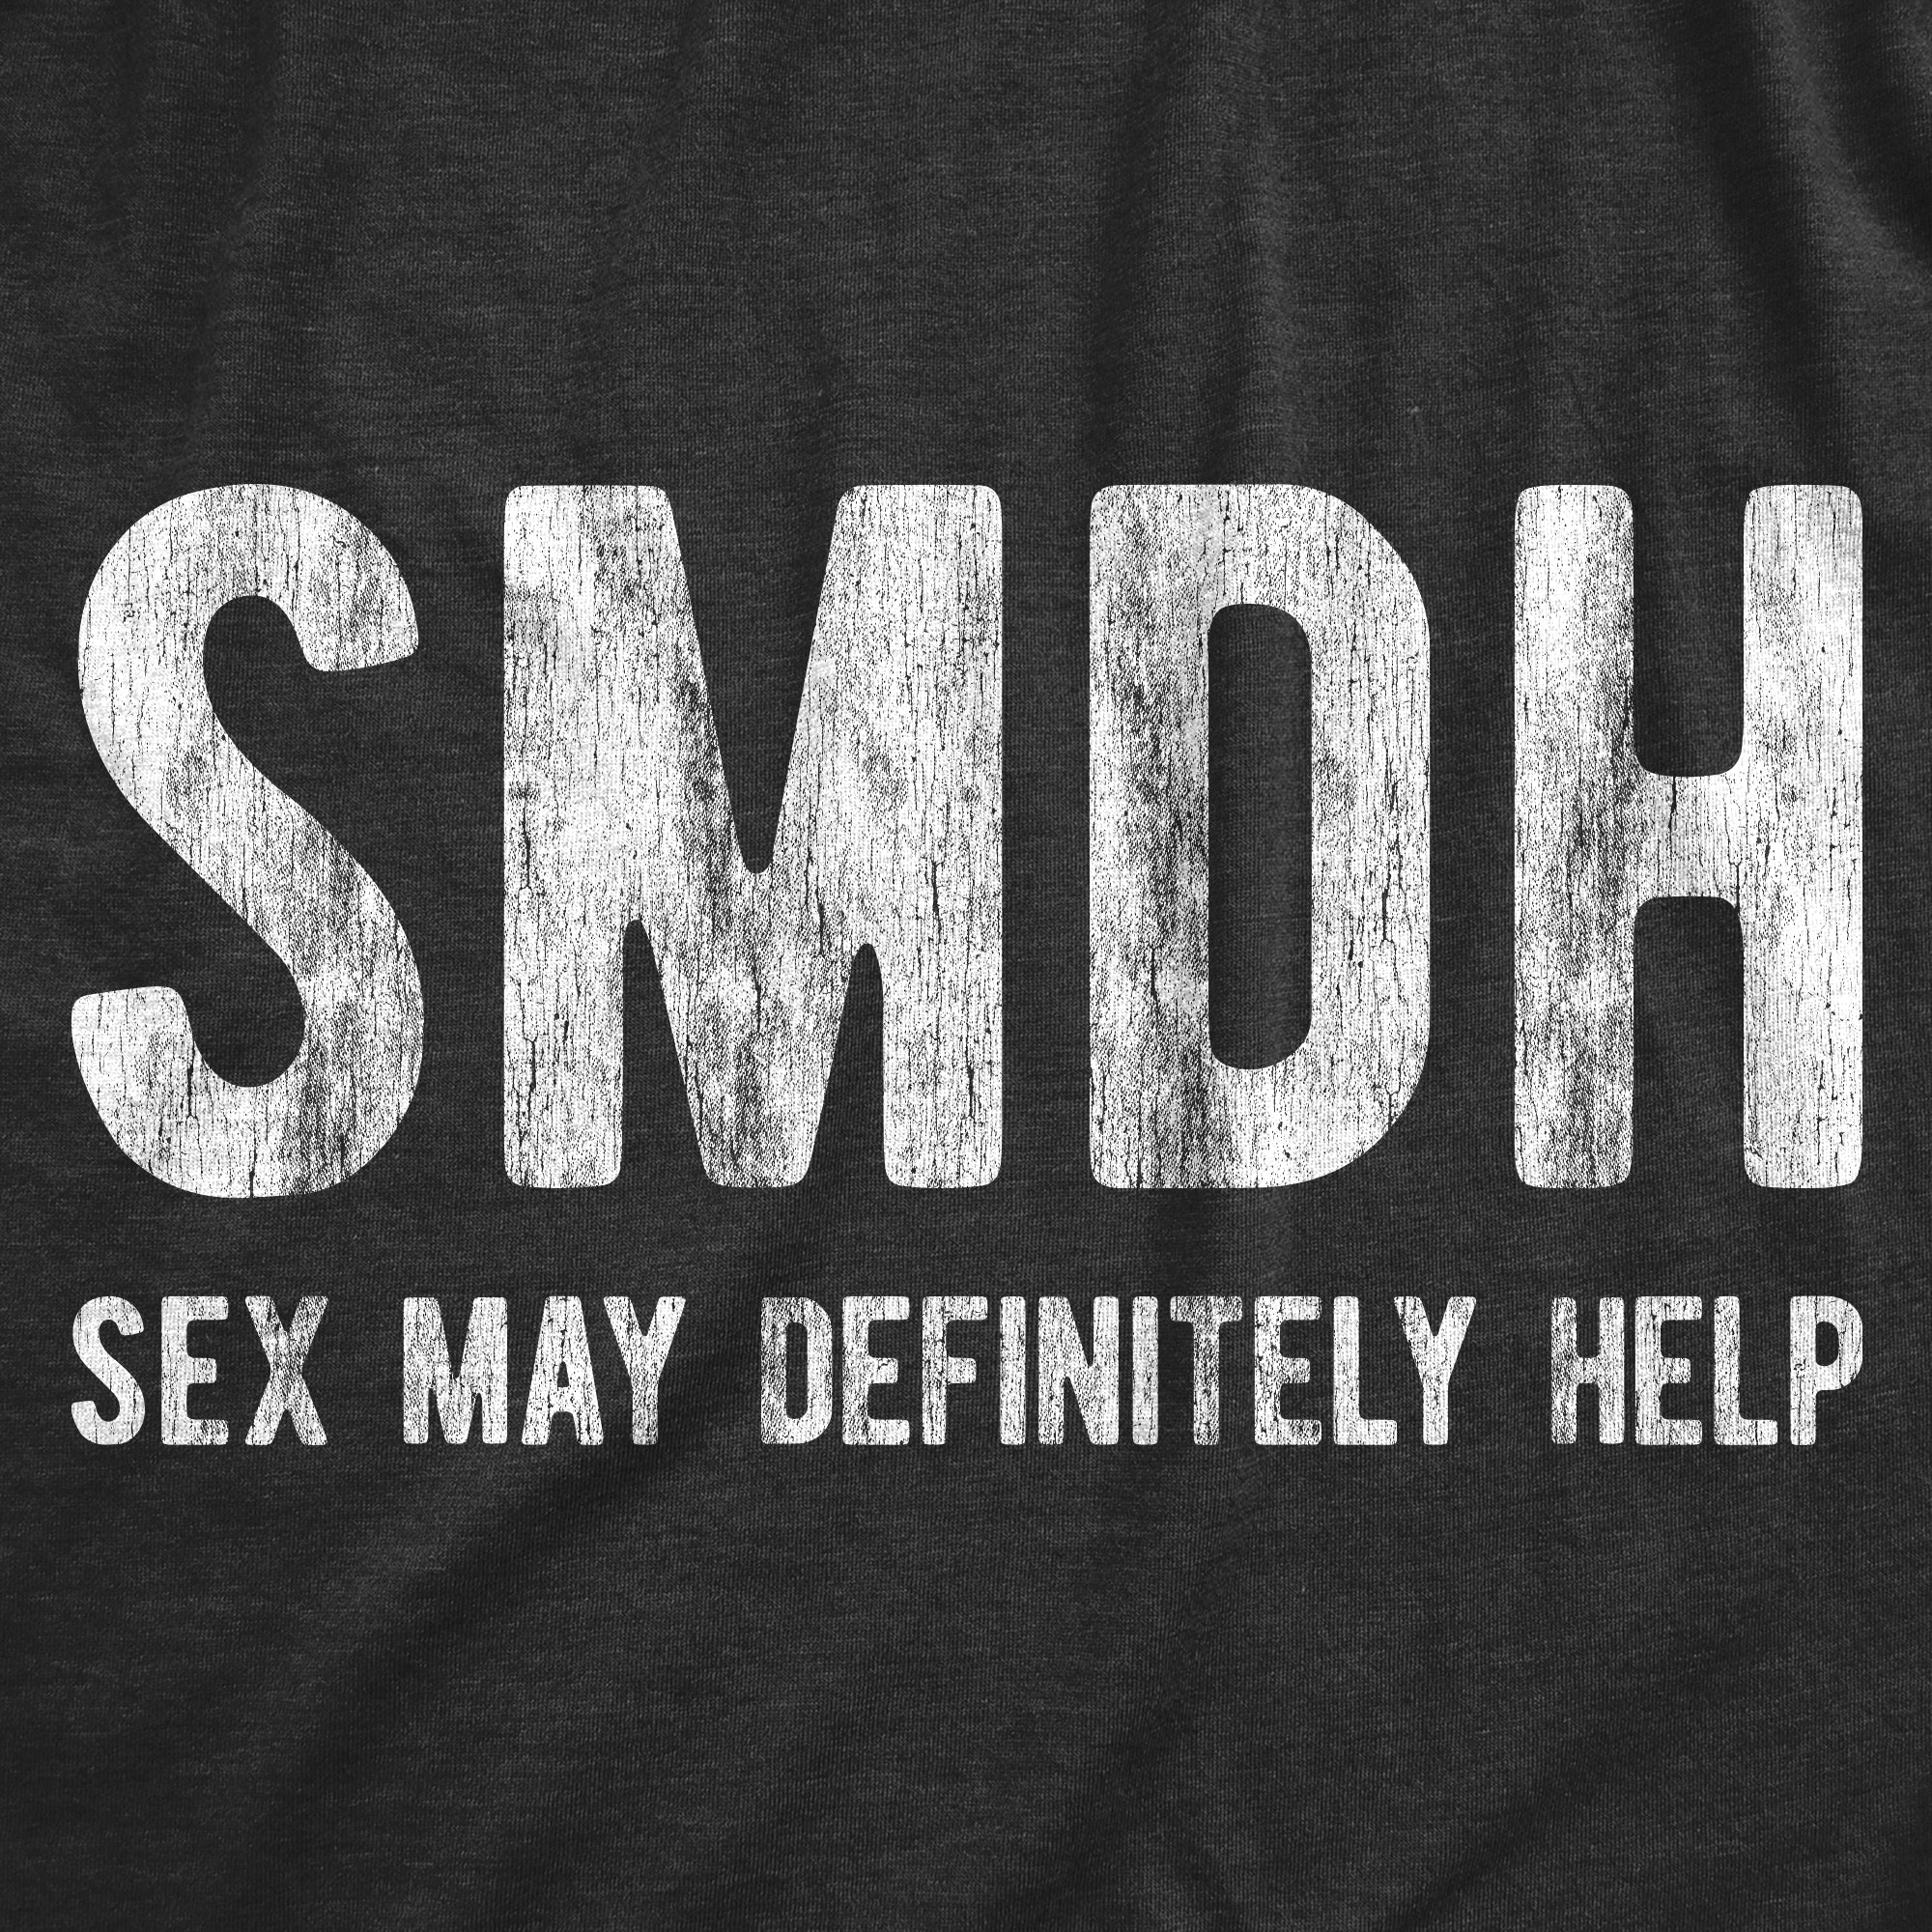 Funny Heather Black - SMDH SMDH Sex May Definitely Help Mens T Shirt Nerdy sex sarcastic Tee